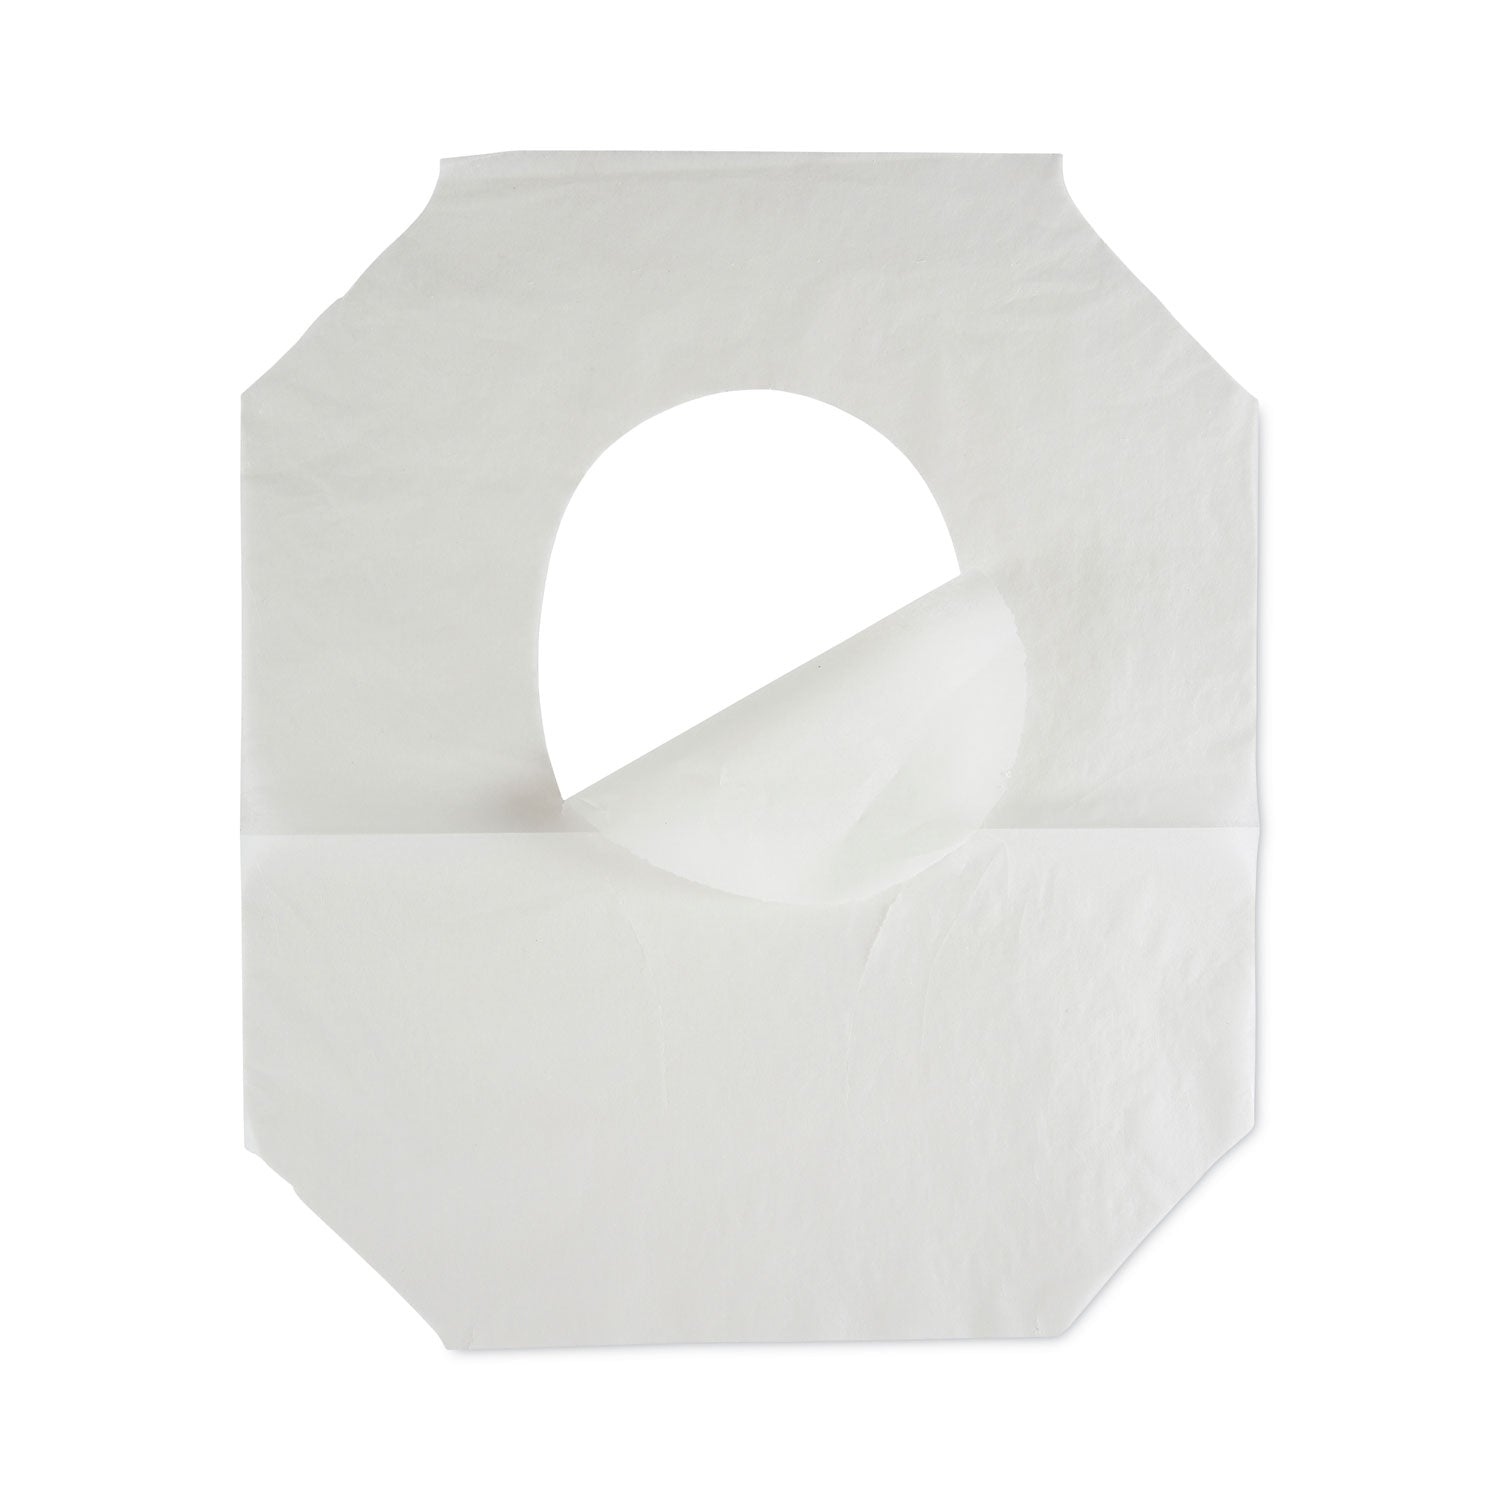 premium-half-fold-toilet-seat-covers-1417-x-1673-white-250-covers-sleeve-4-sleeves-carton_bwkk1000b - 3